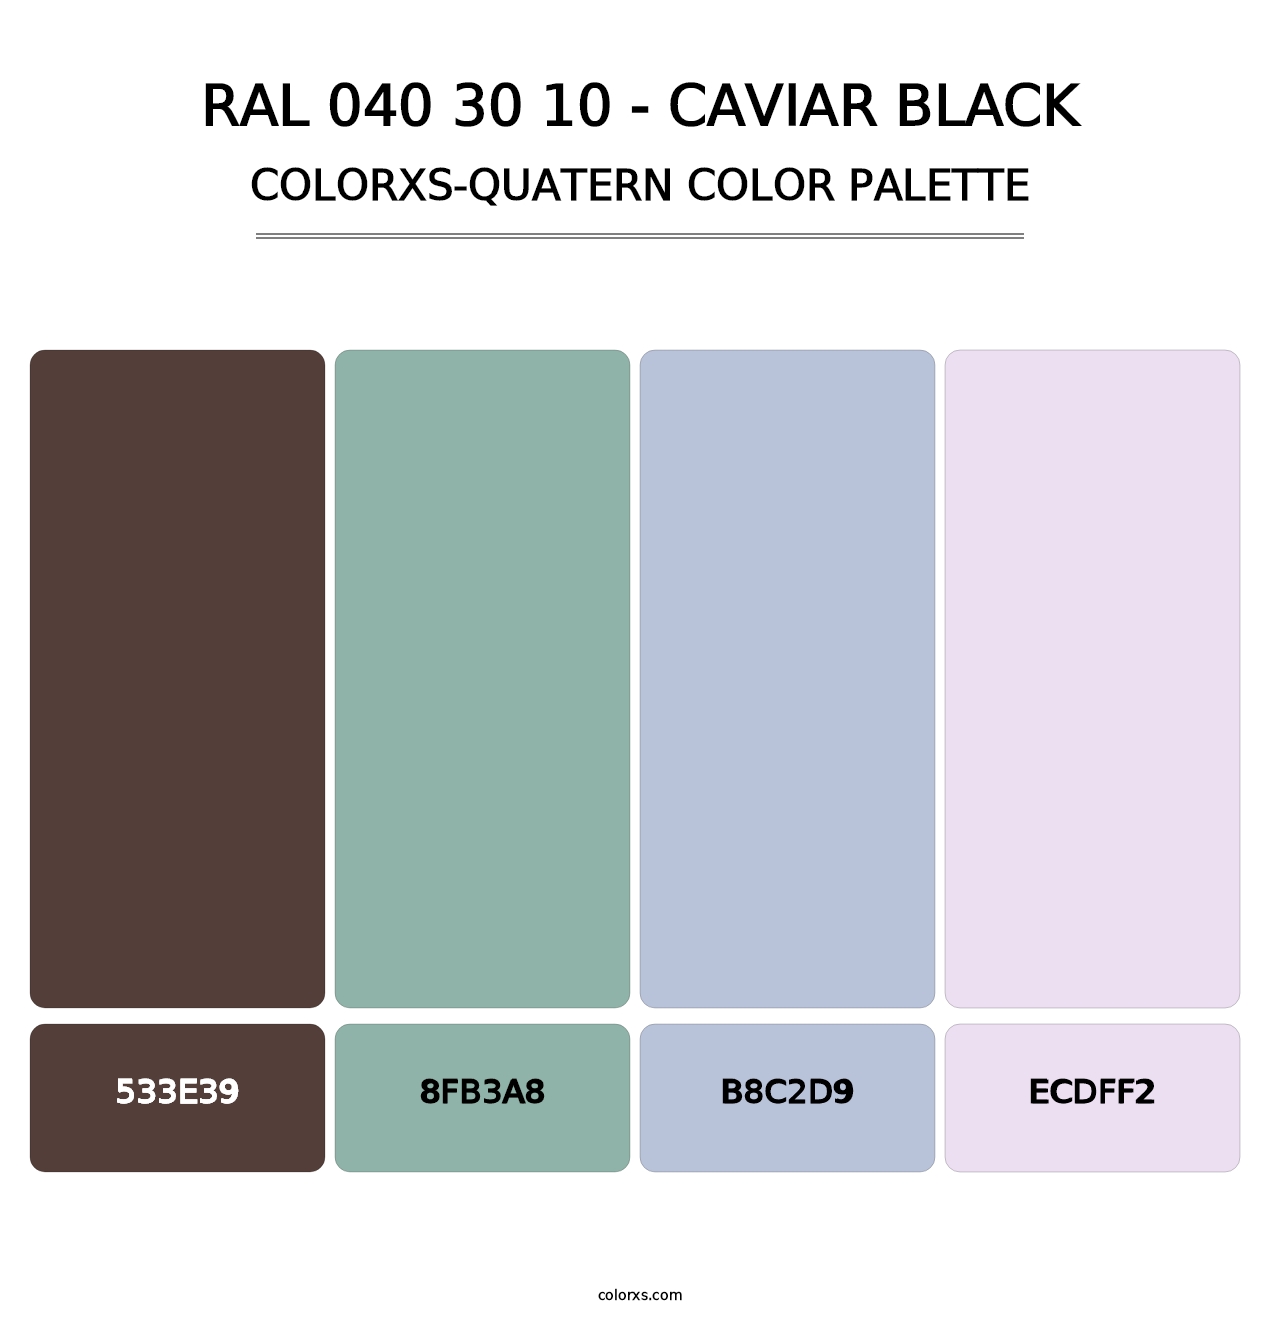 RAL 040 30 10 - Caviar Black - Colorxs Quatern Palette